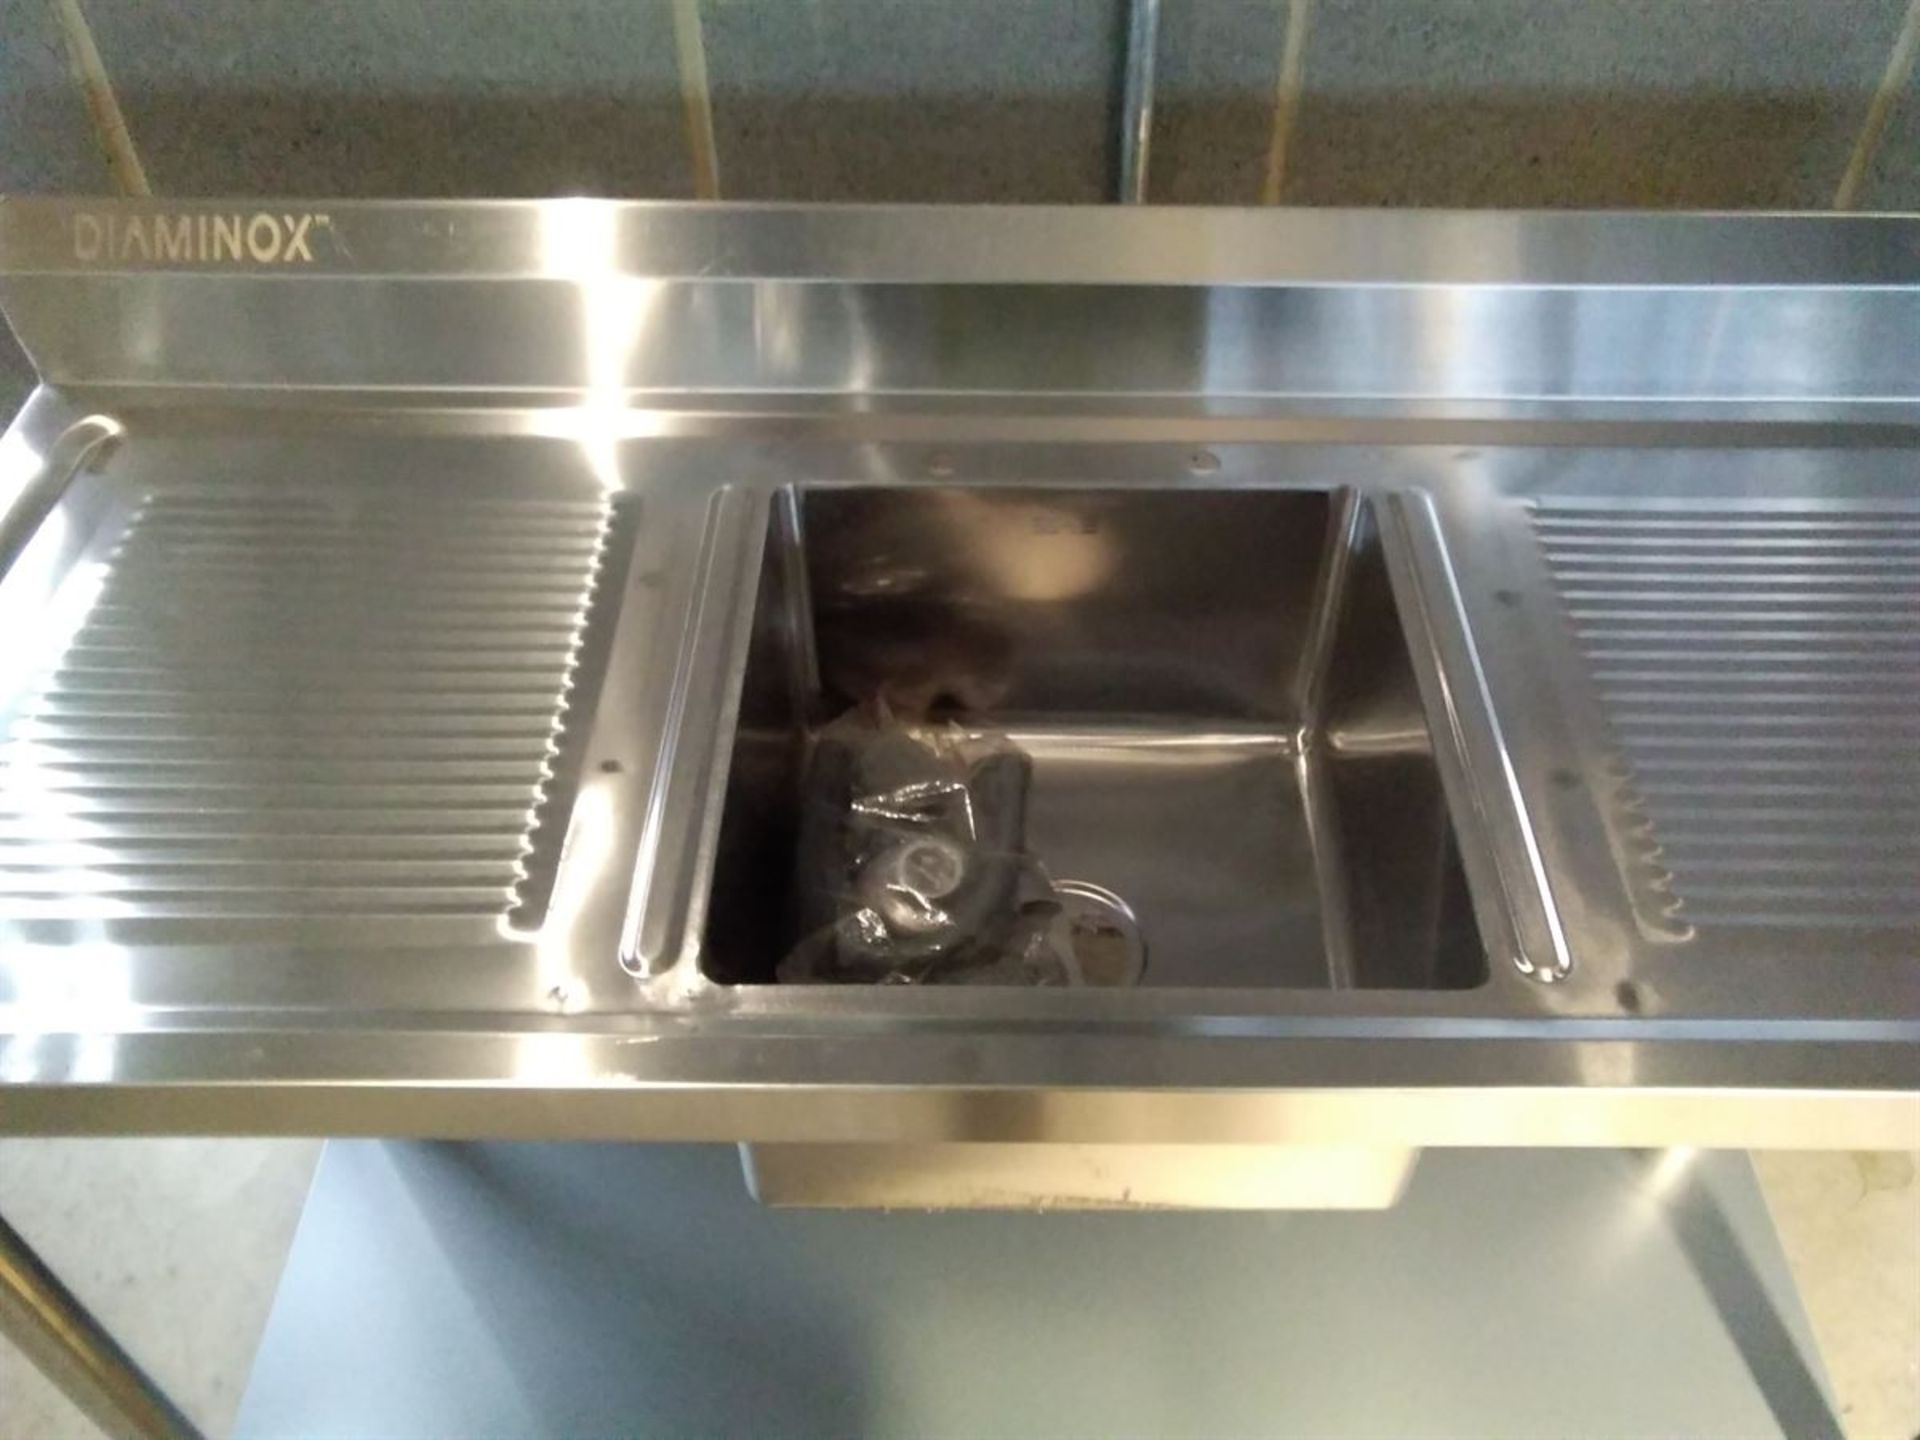 Diaminox Stainless Steel Sink. 1500 x 600 x 990mm - Image 4 of 4